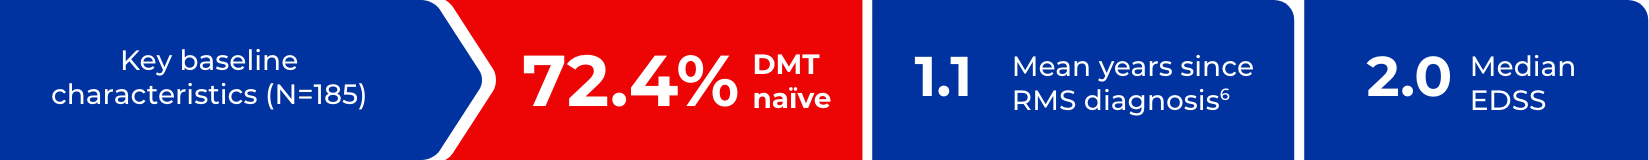 Key Baseline Characteristics: 72.4% DMT naïve, 1.1 Mean years since RMS Diagnosis, 2.0 Median EDSS